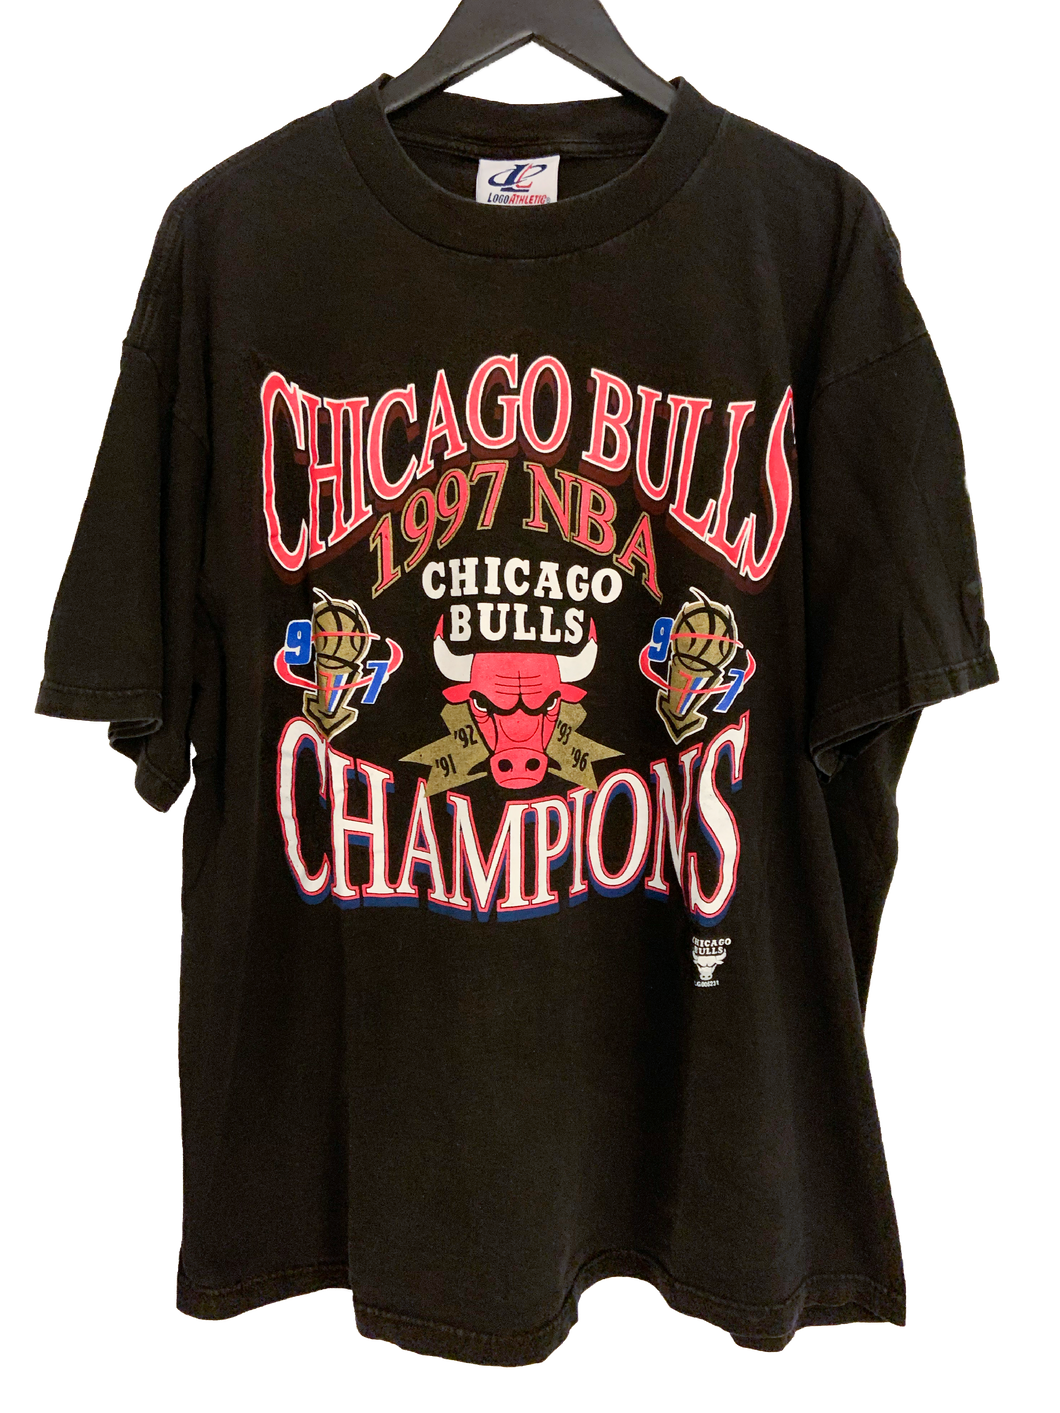 1997 CHICAGO BULLS CHAMPIONS TEE - XL